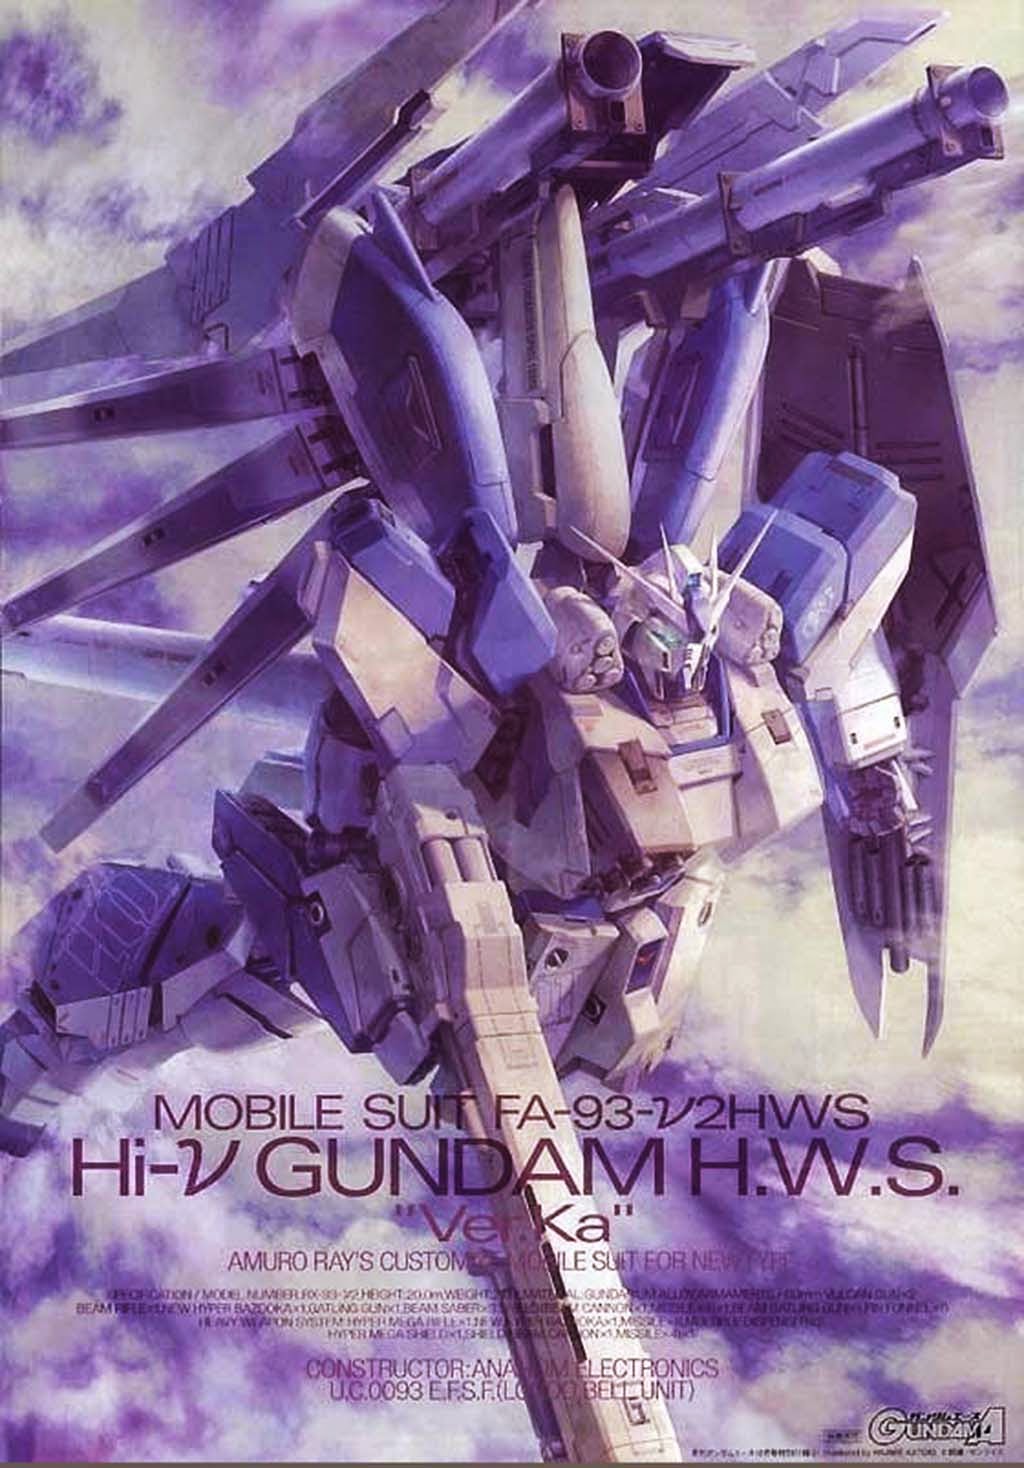 Wallpaper Fa 93 N2 Hws Hi Nu Gundam Hws Heavy Weapon System Gundam Kits Collection News And Reviews